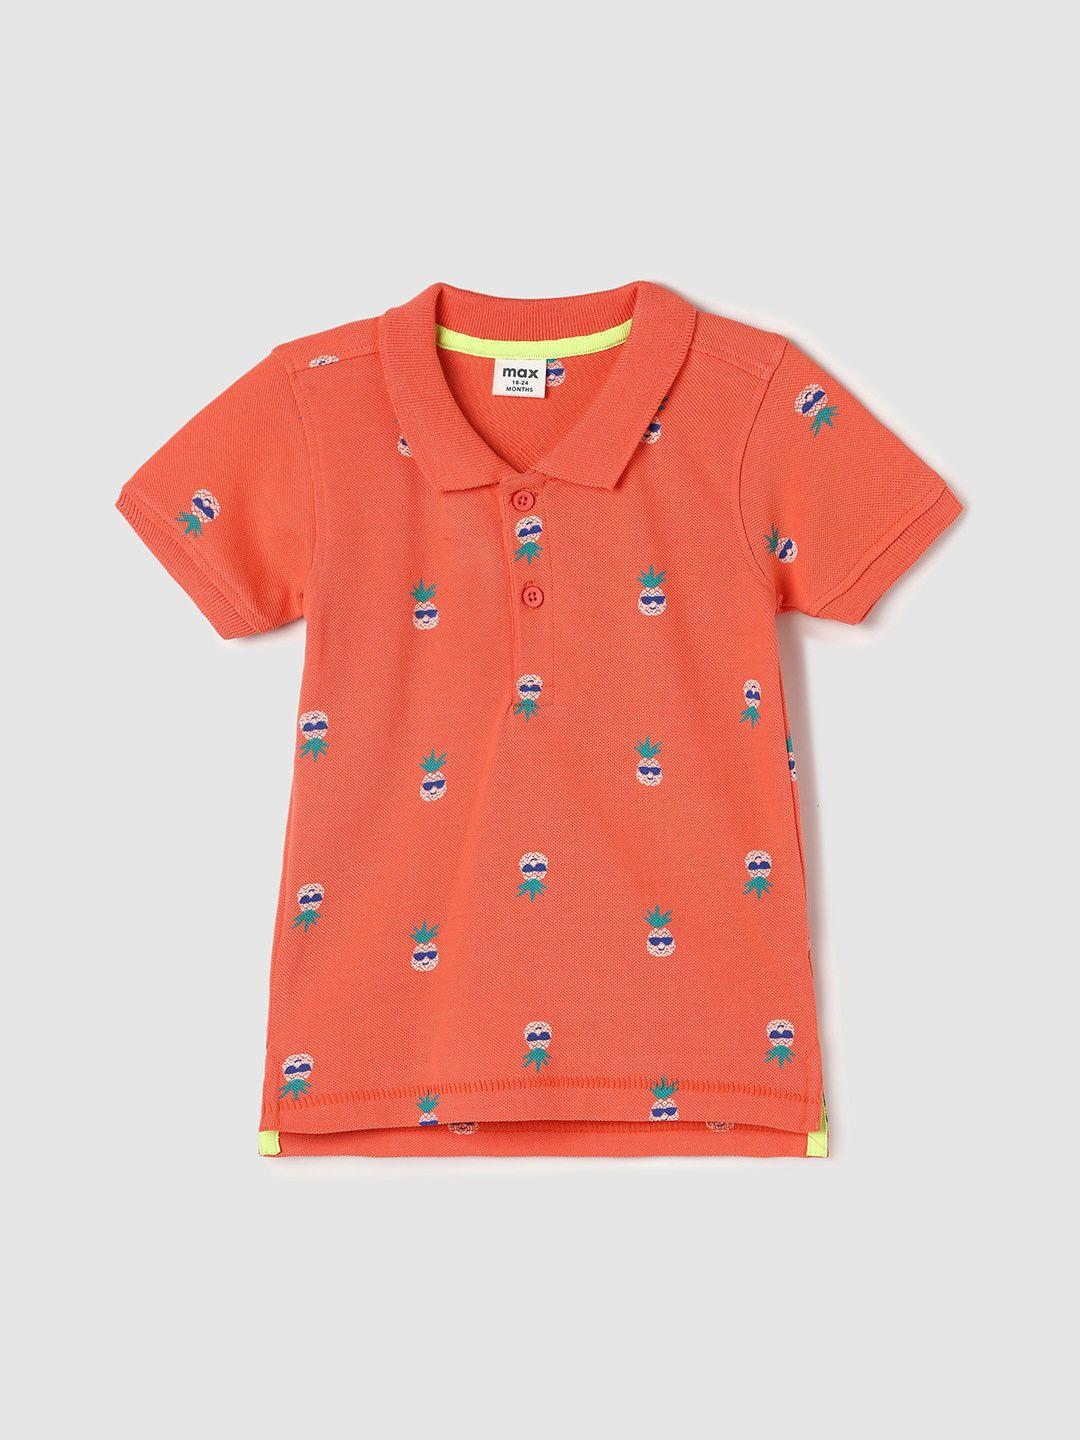 max boys conversational printed polo collar t-shirt